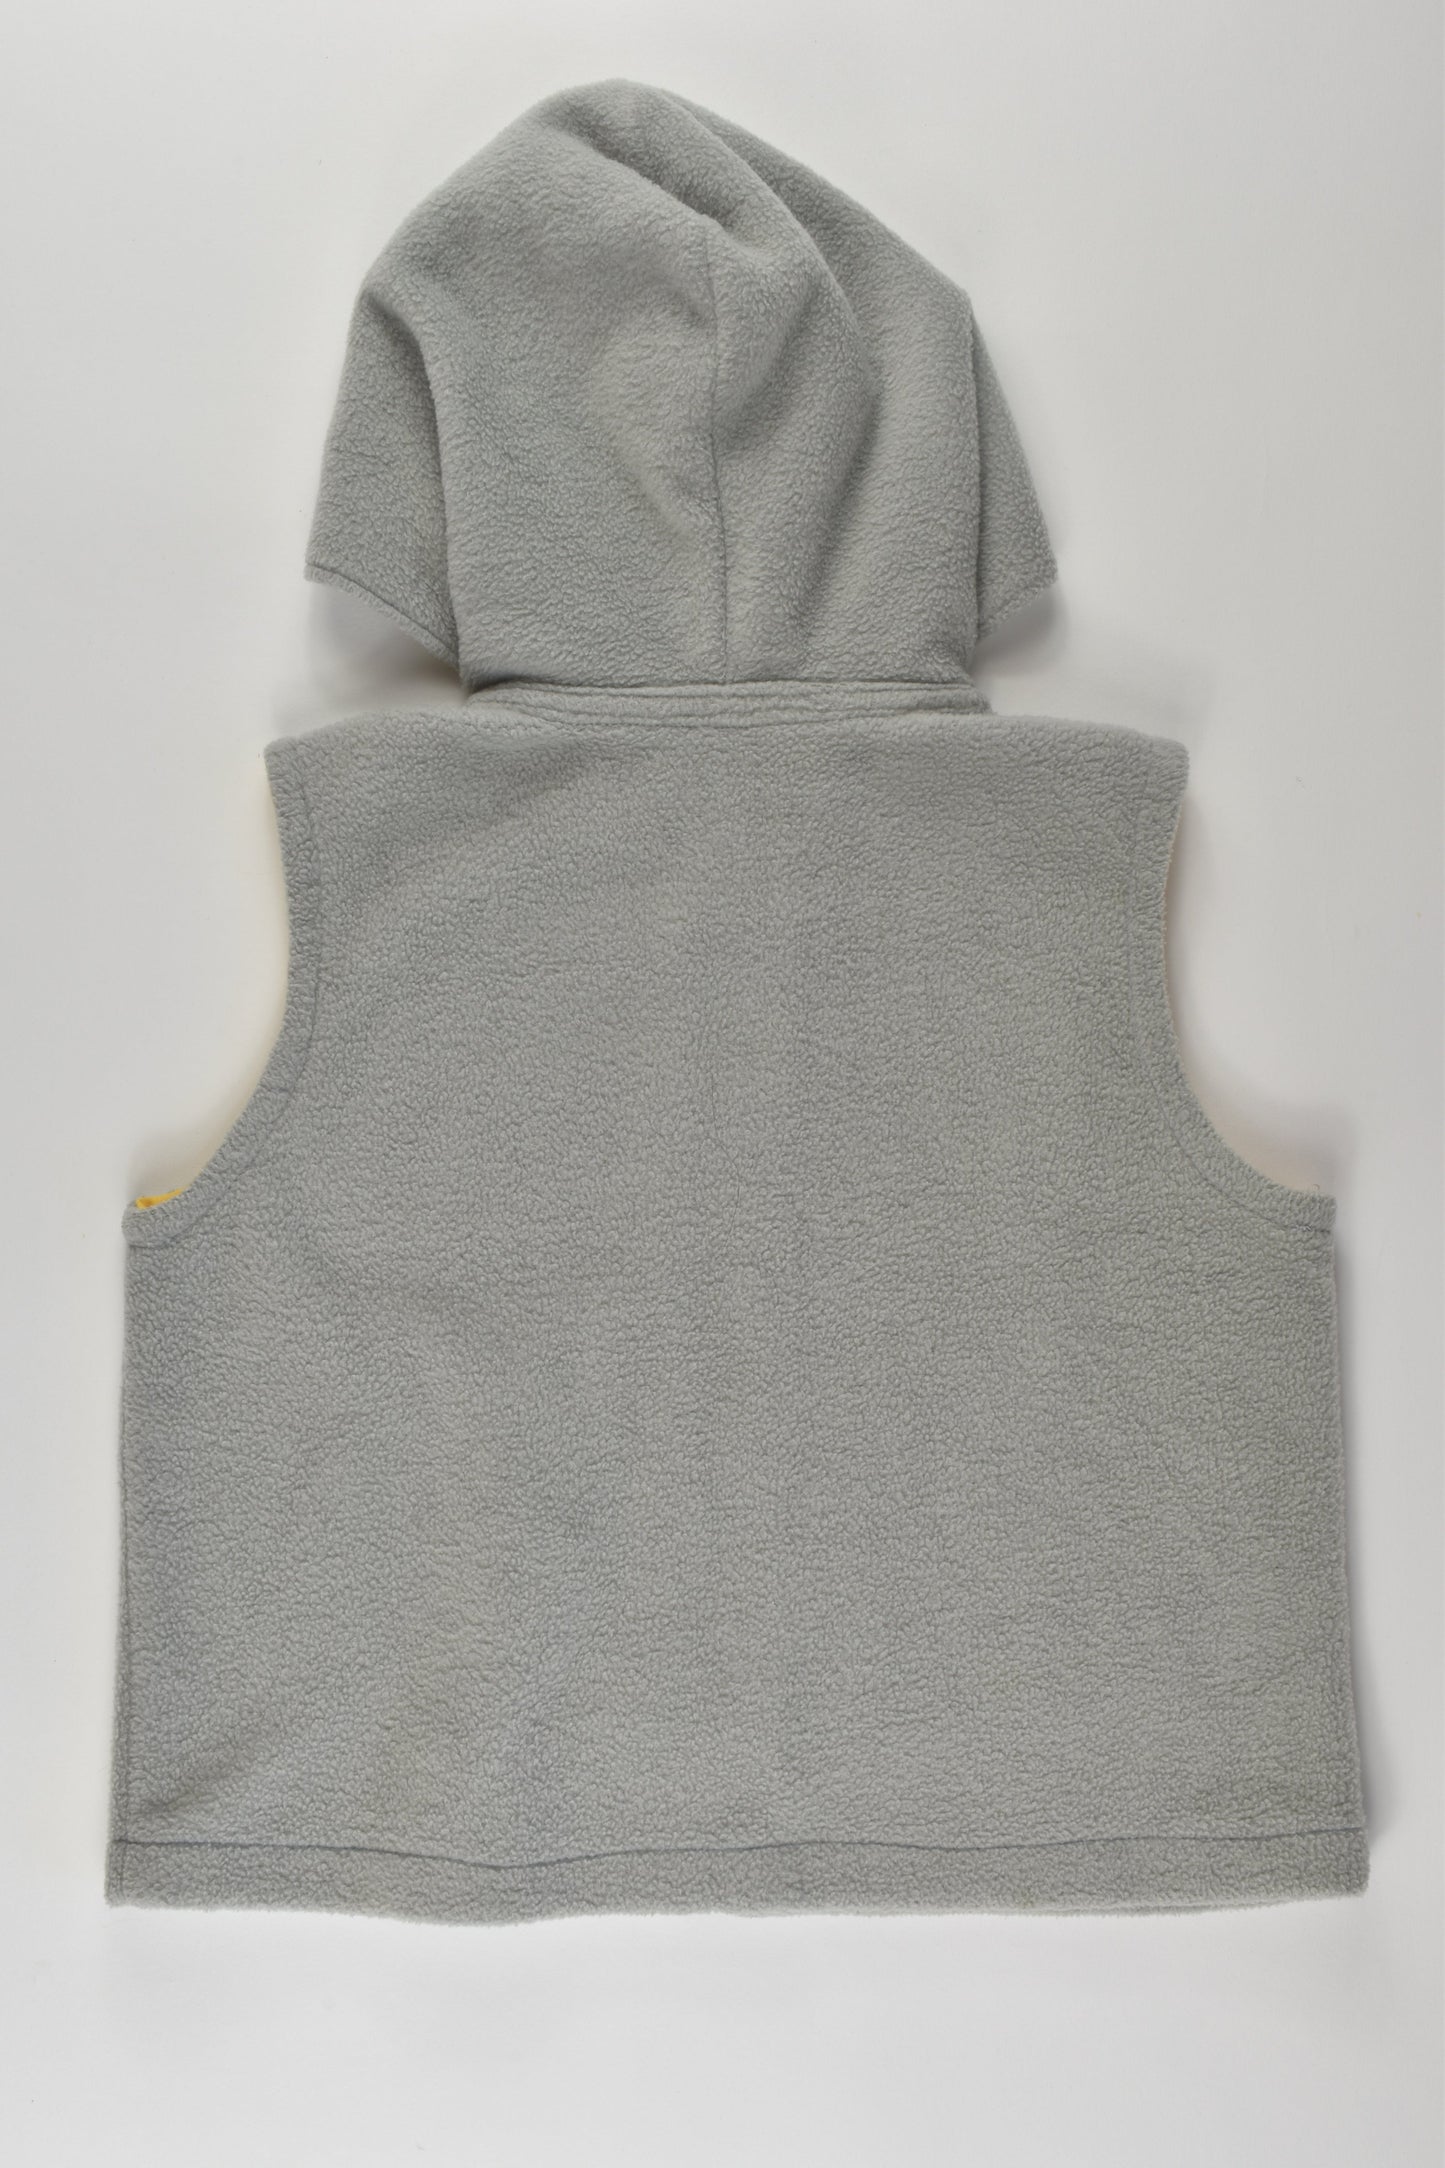 Handmade Size approx 4 Dinosaur Fleece Vest with Hood